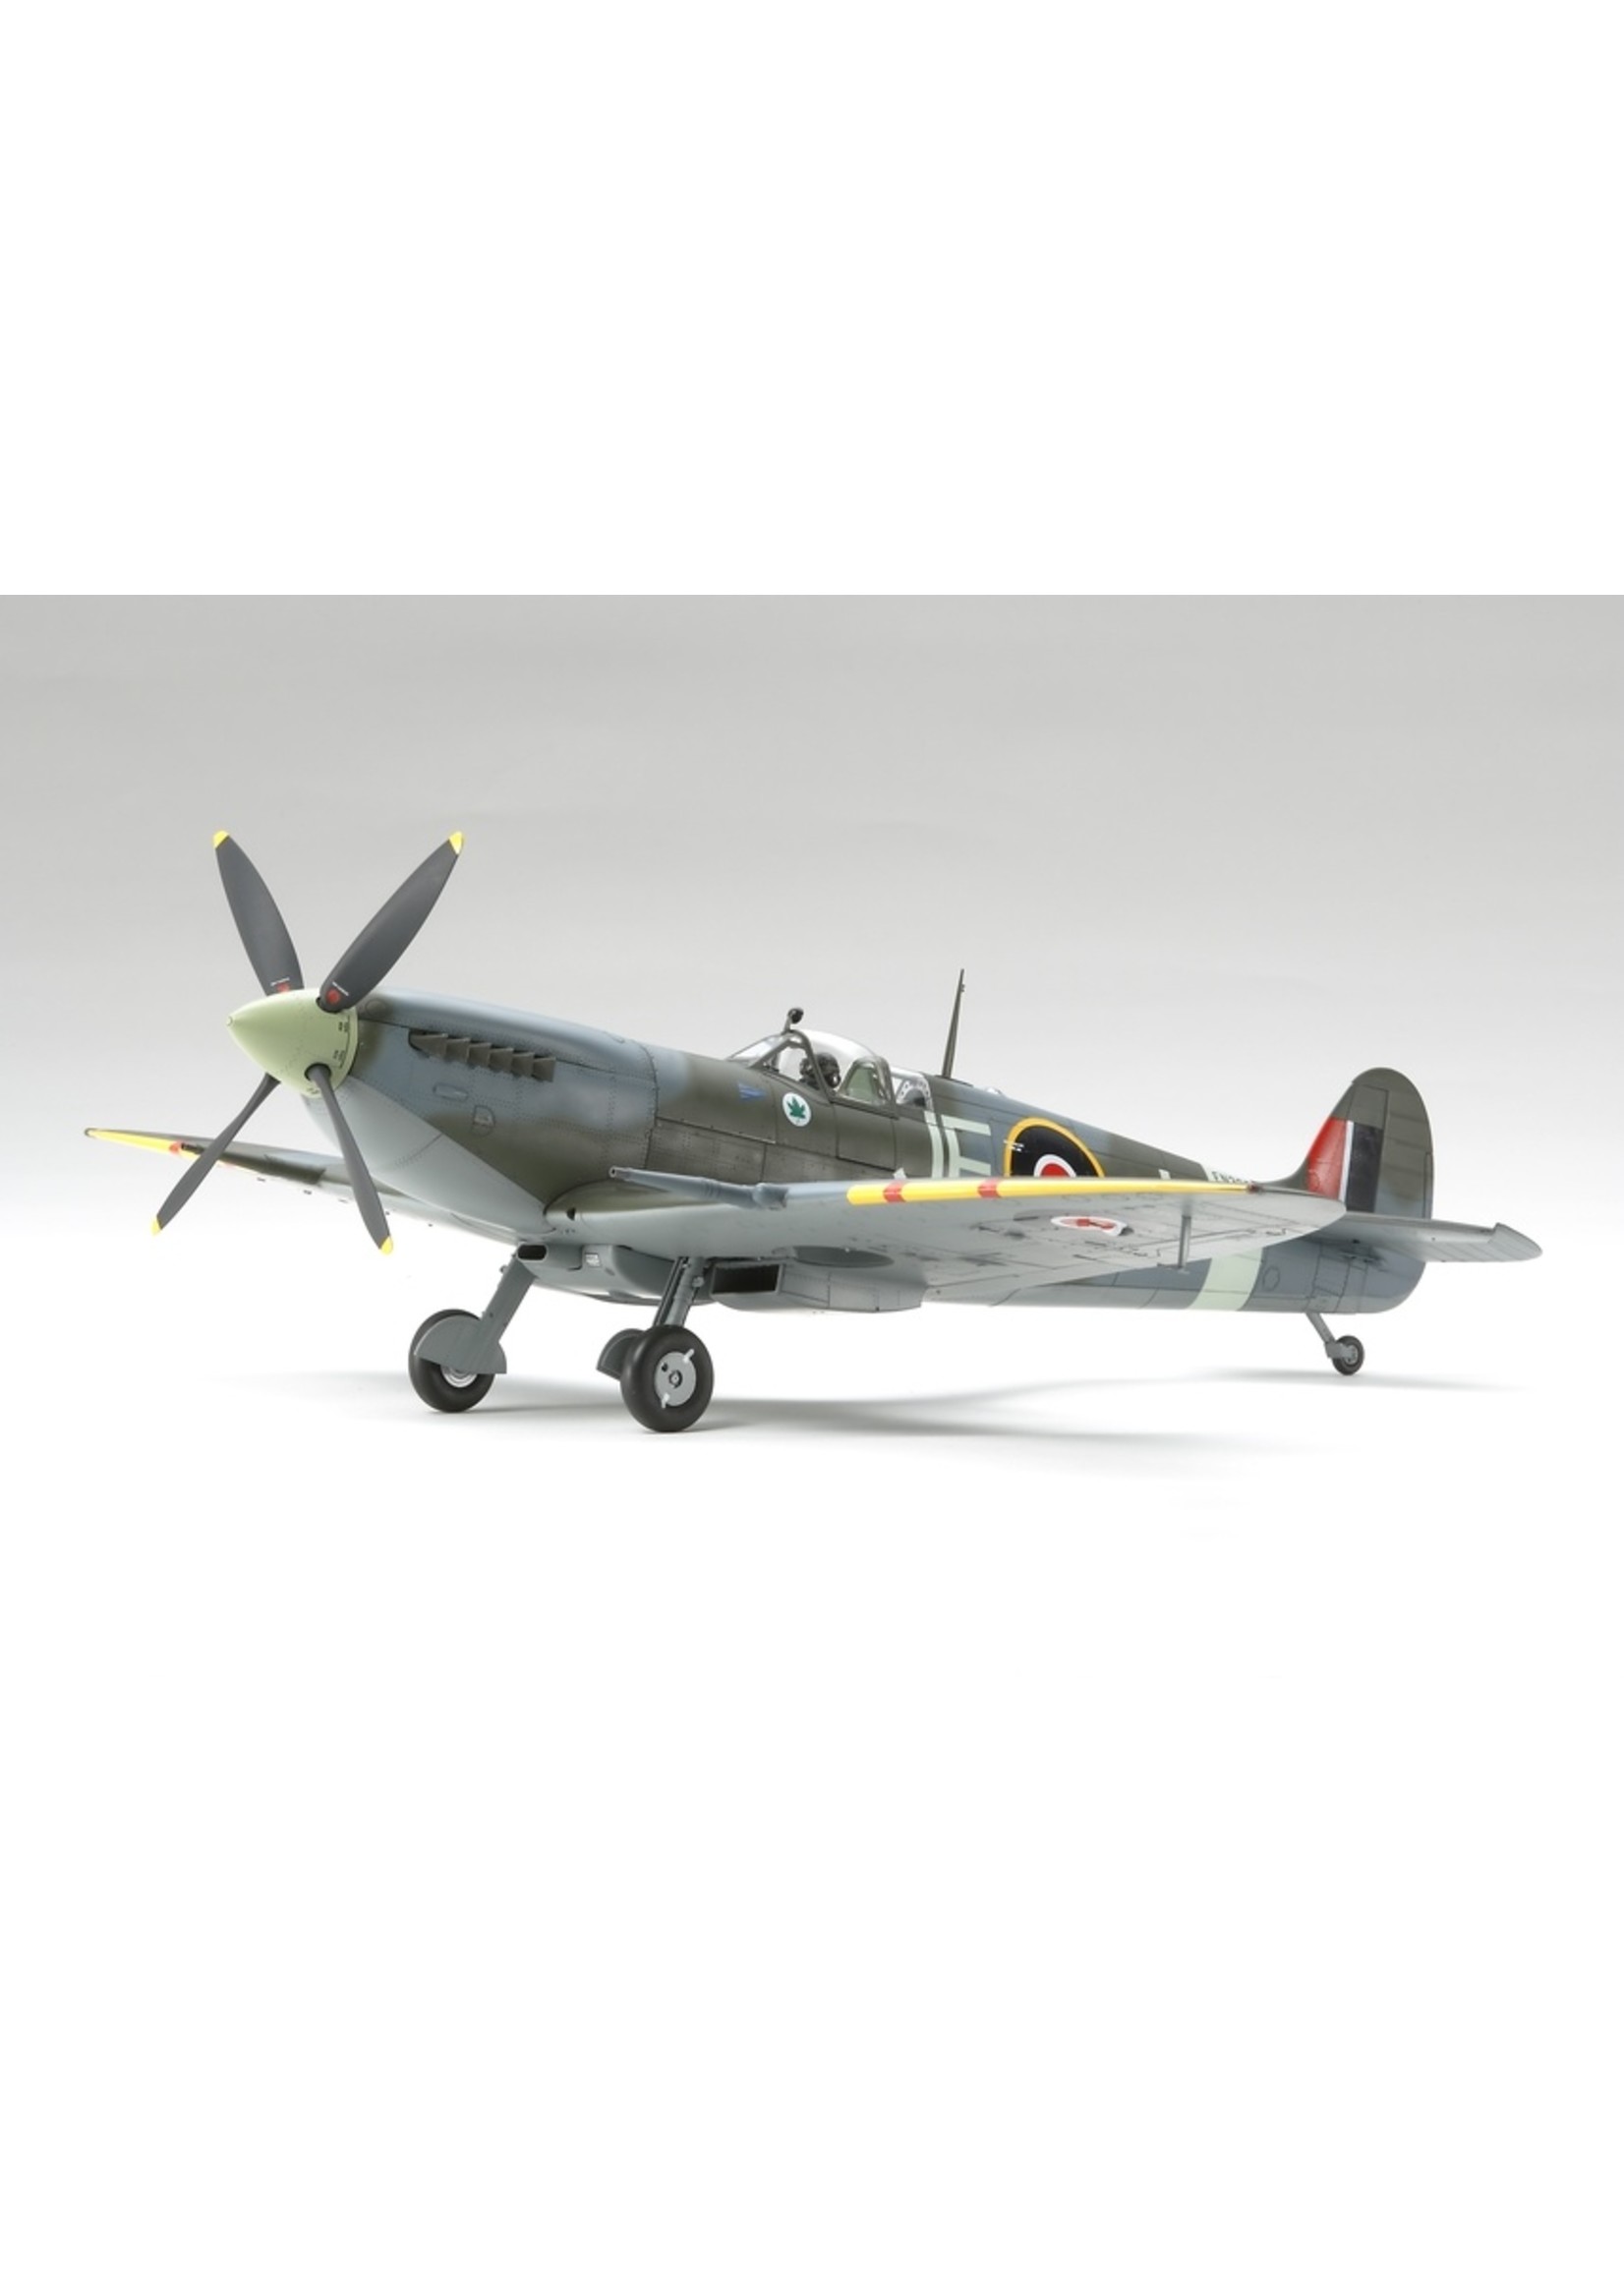 1XC Tamiya 1/32 scale WW2 British RAF SPITFIRE MK 